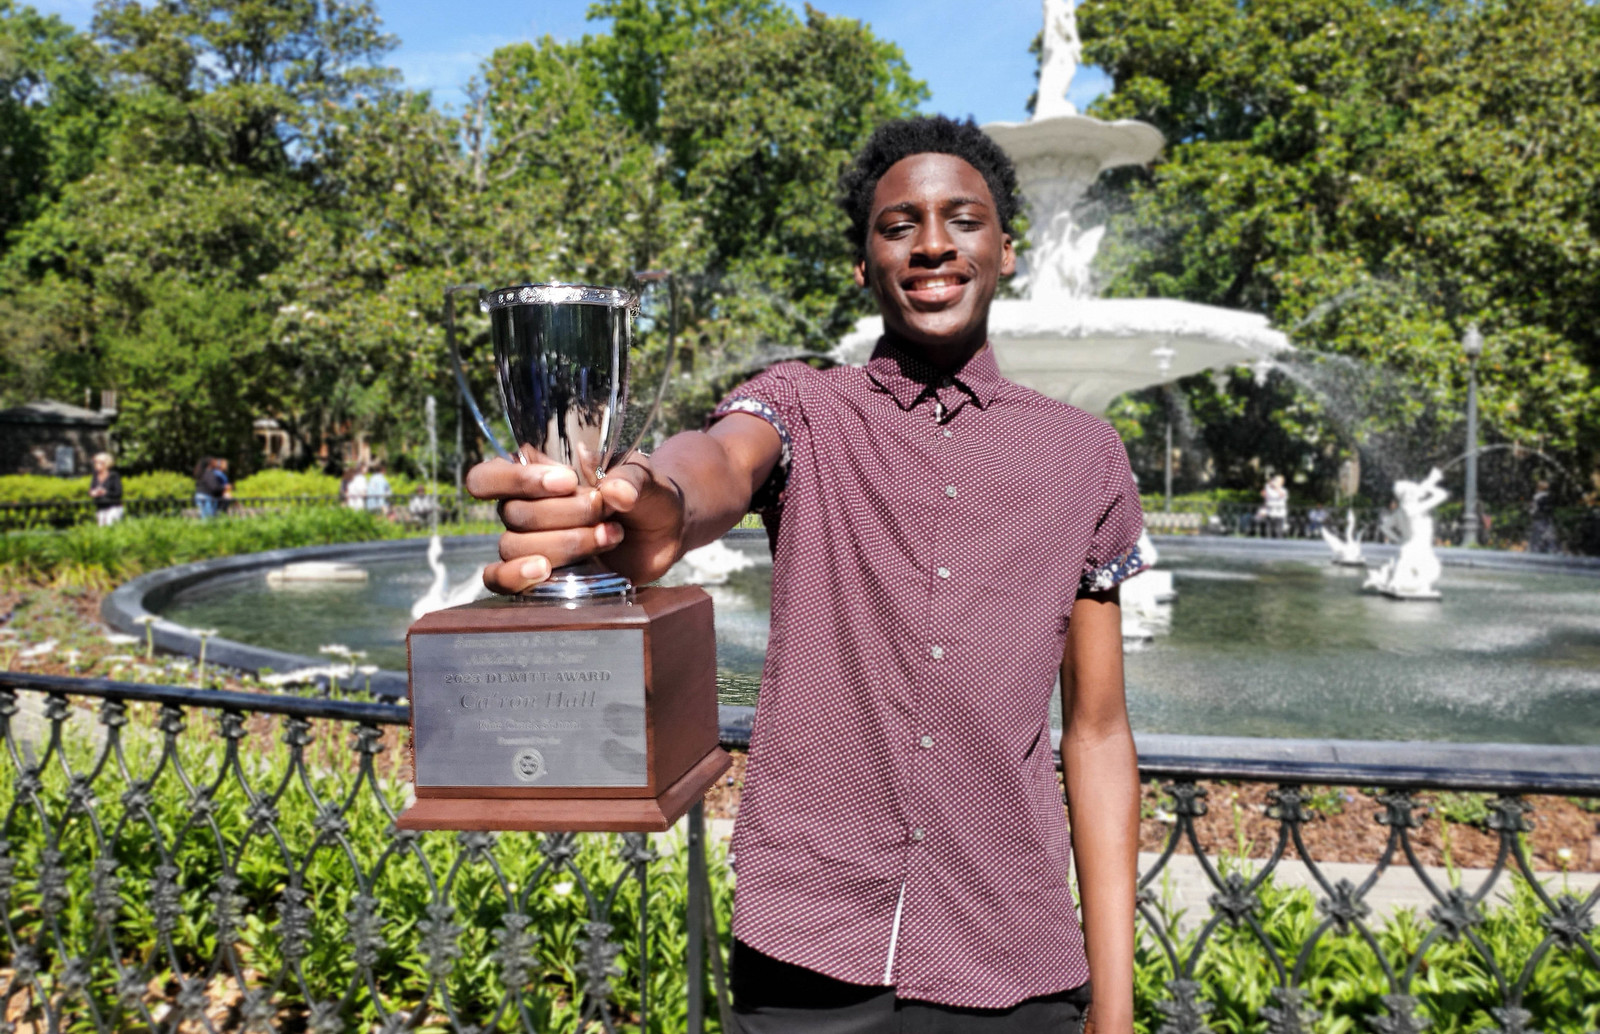 The DeWitt Savannah 8th Grade Athlete of the Year Awards